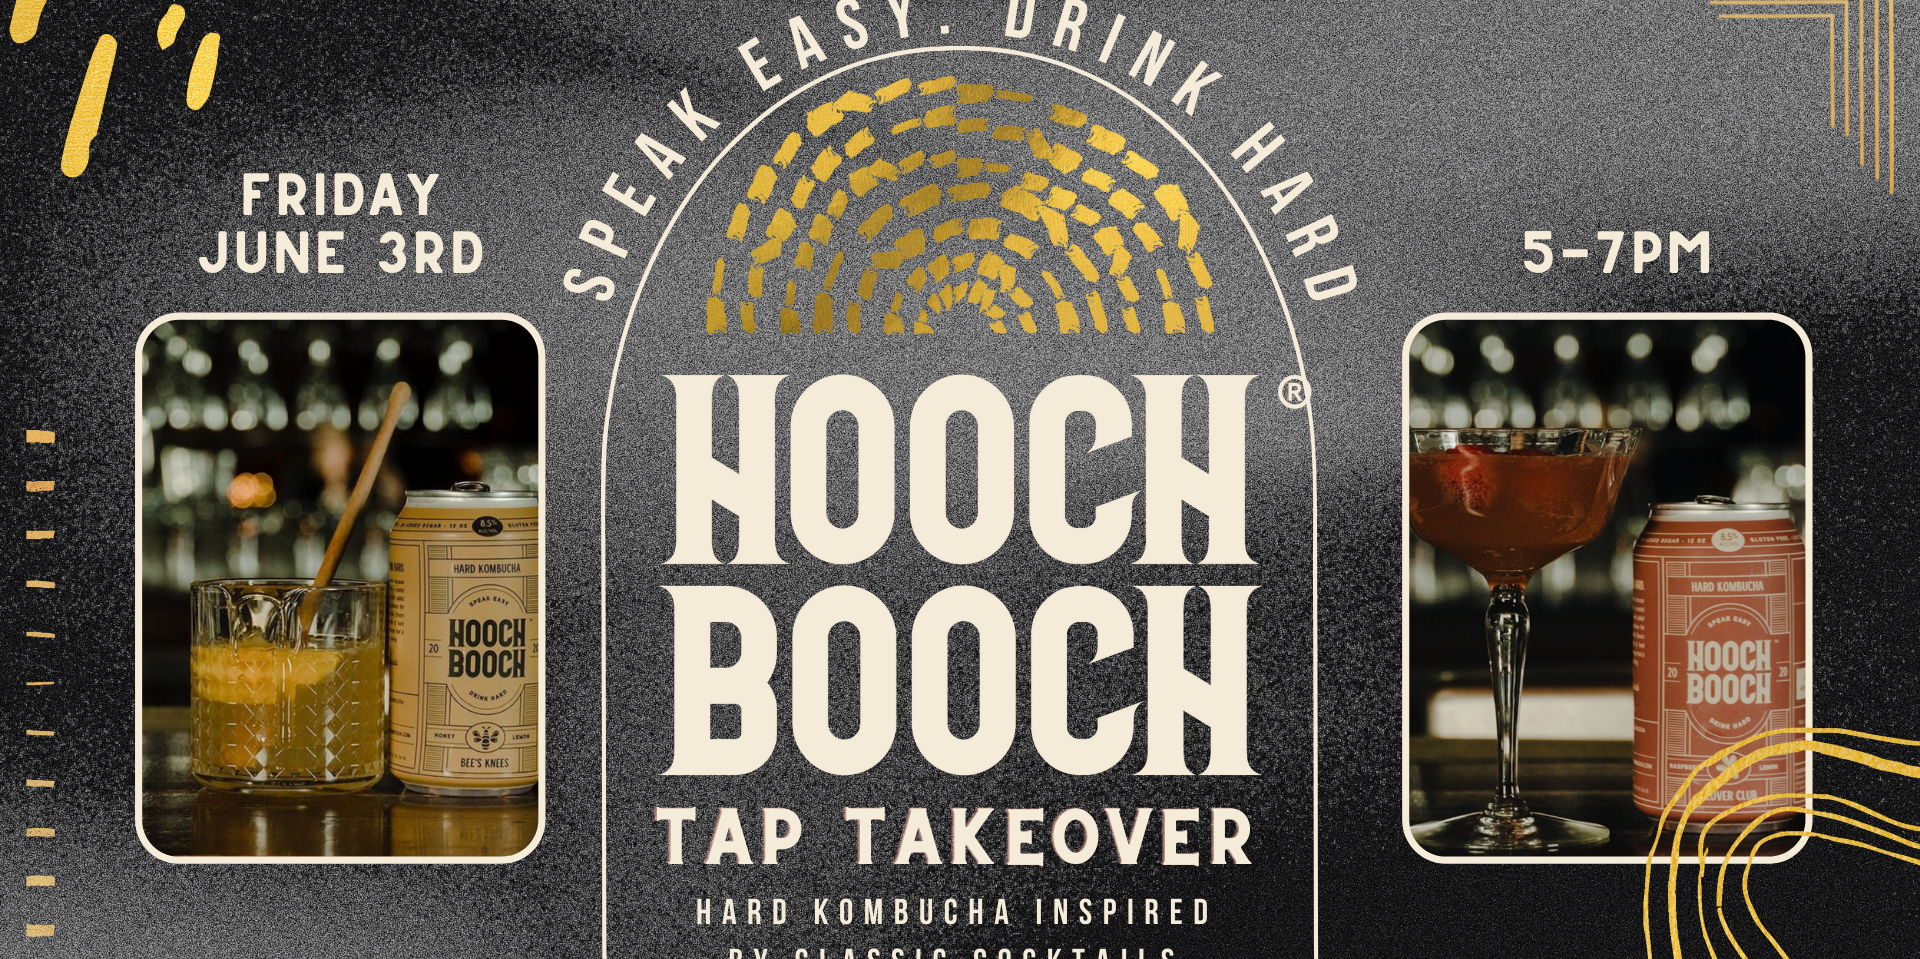 Hoochbooch Tap Takeover promotional image